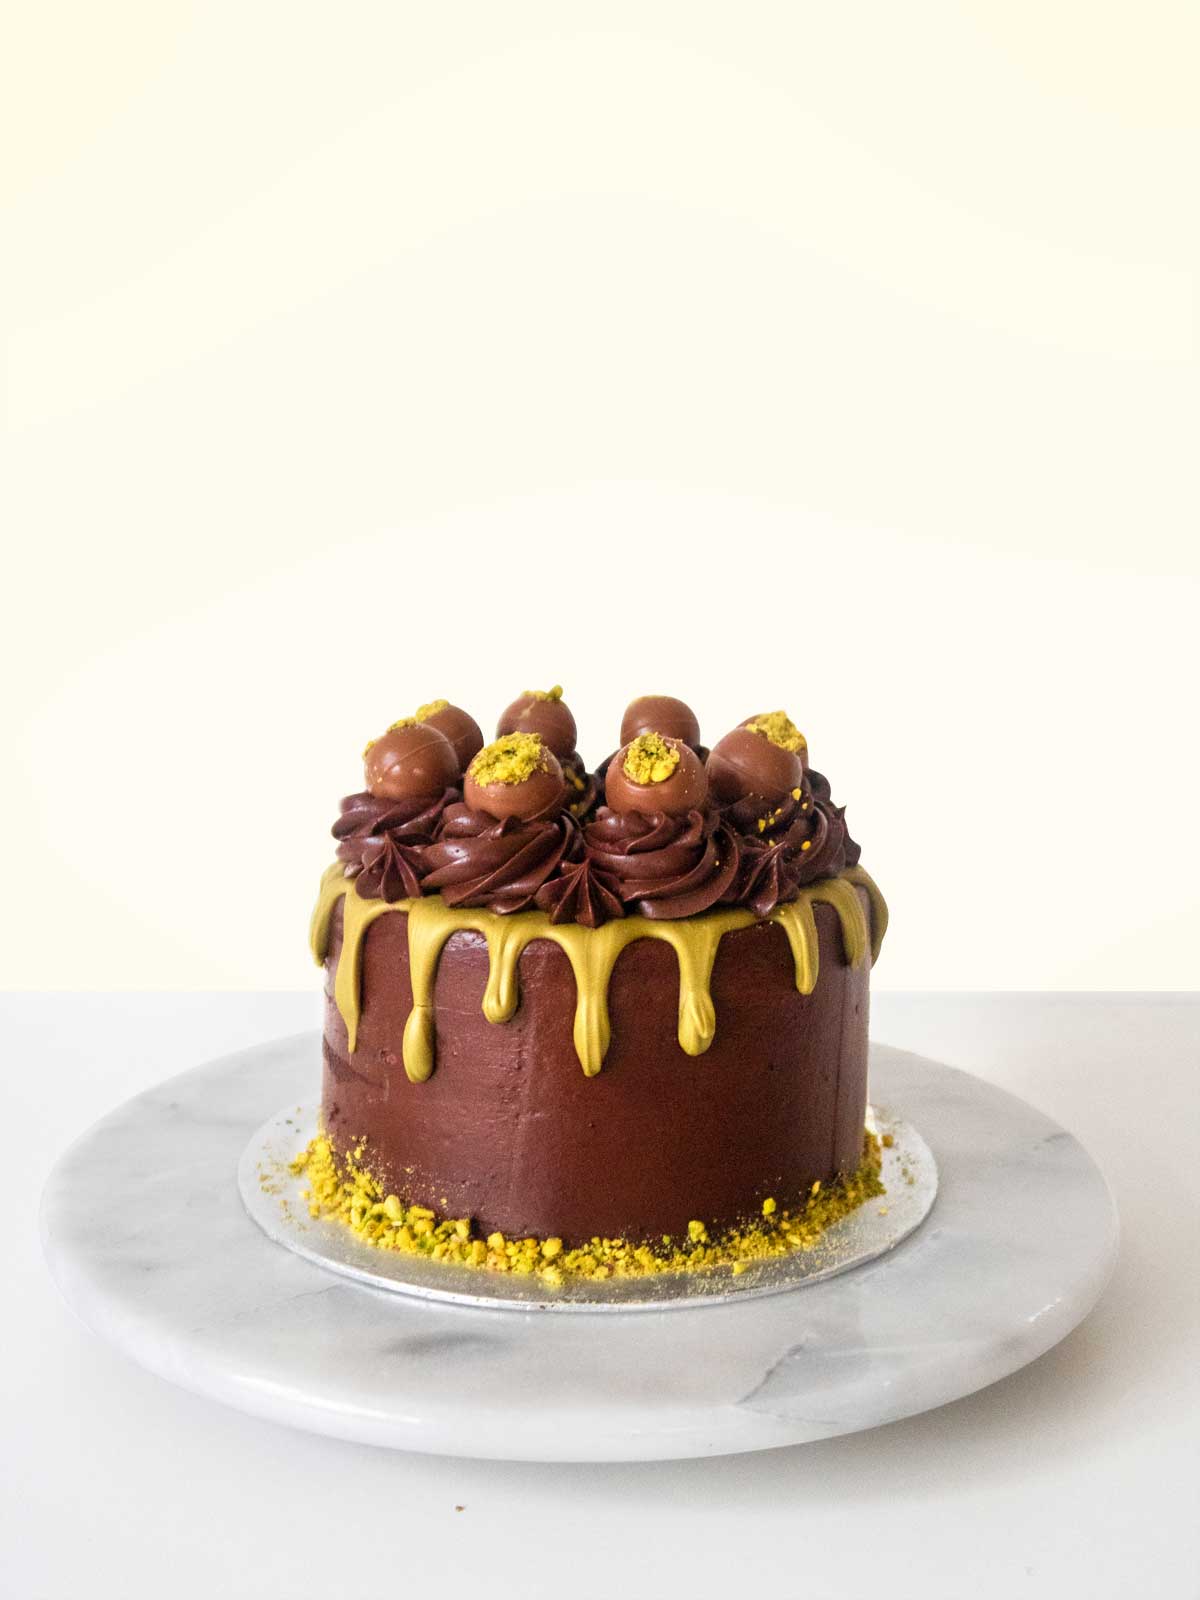 Chocolate Pistachio Truffle Cake to Buy London Surrey